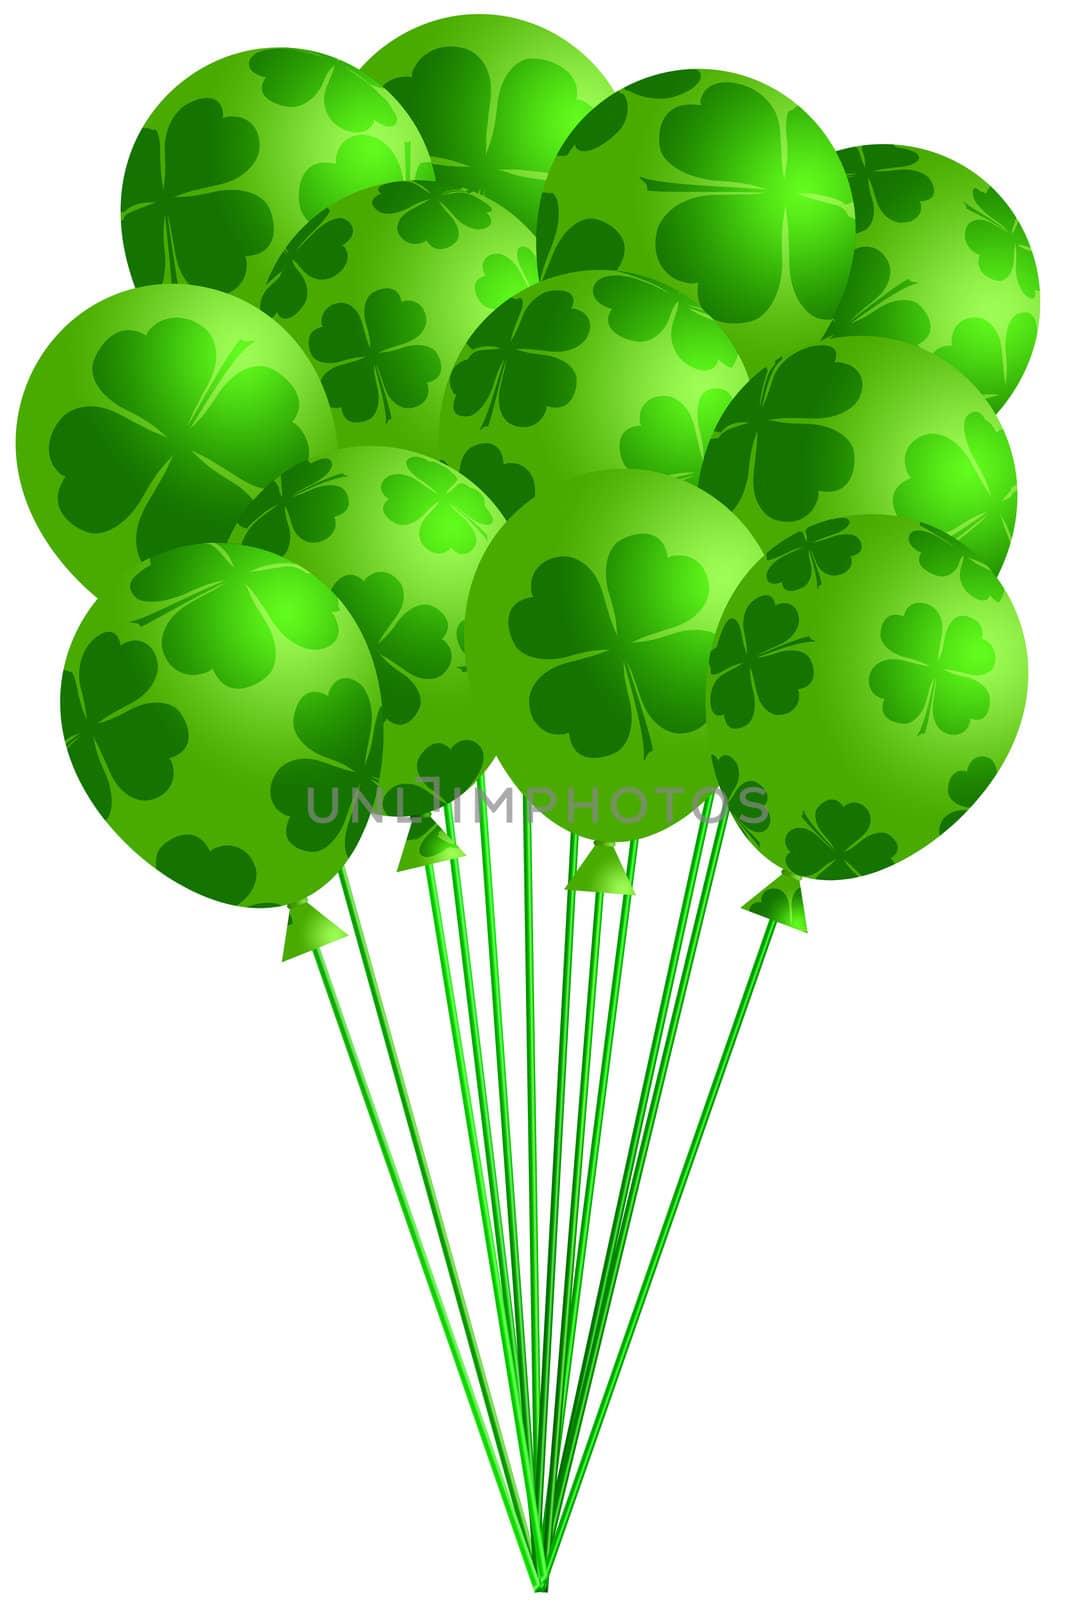 St Patricks Day Bunch of Irish Green Balloons with Shamrocks Four Leaf Clover Illustration